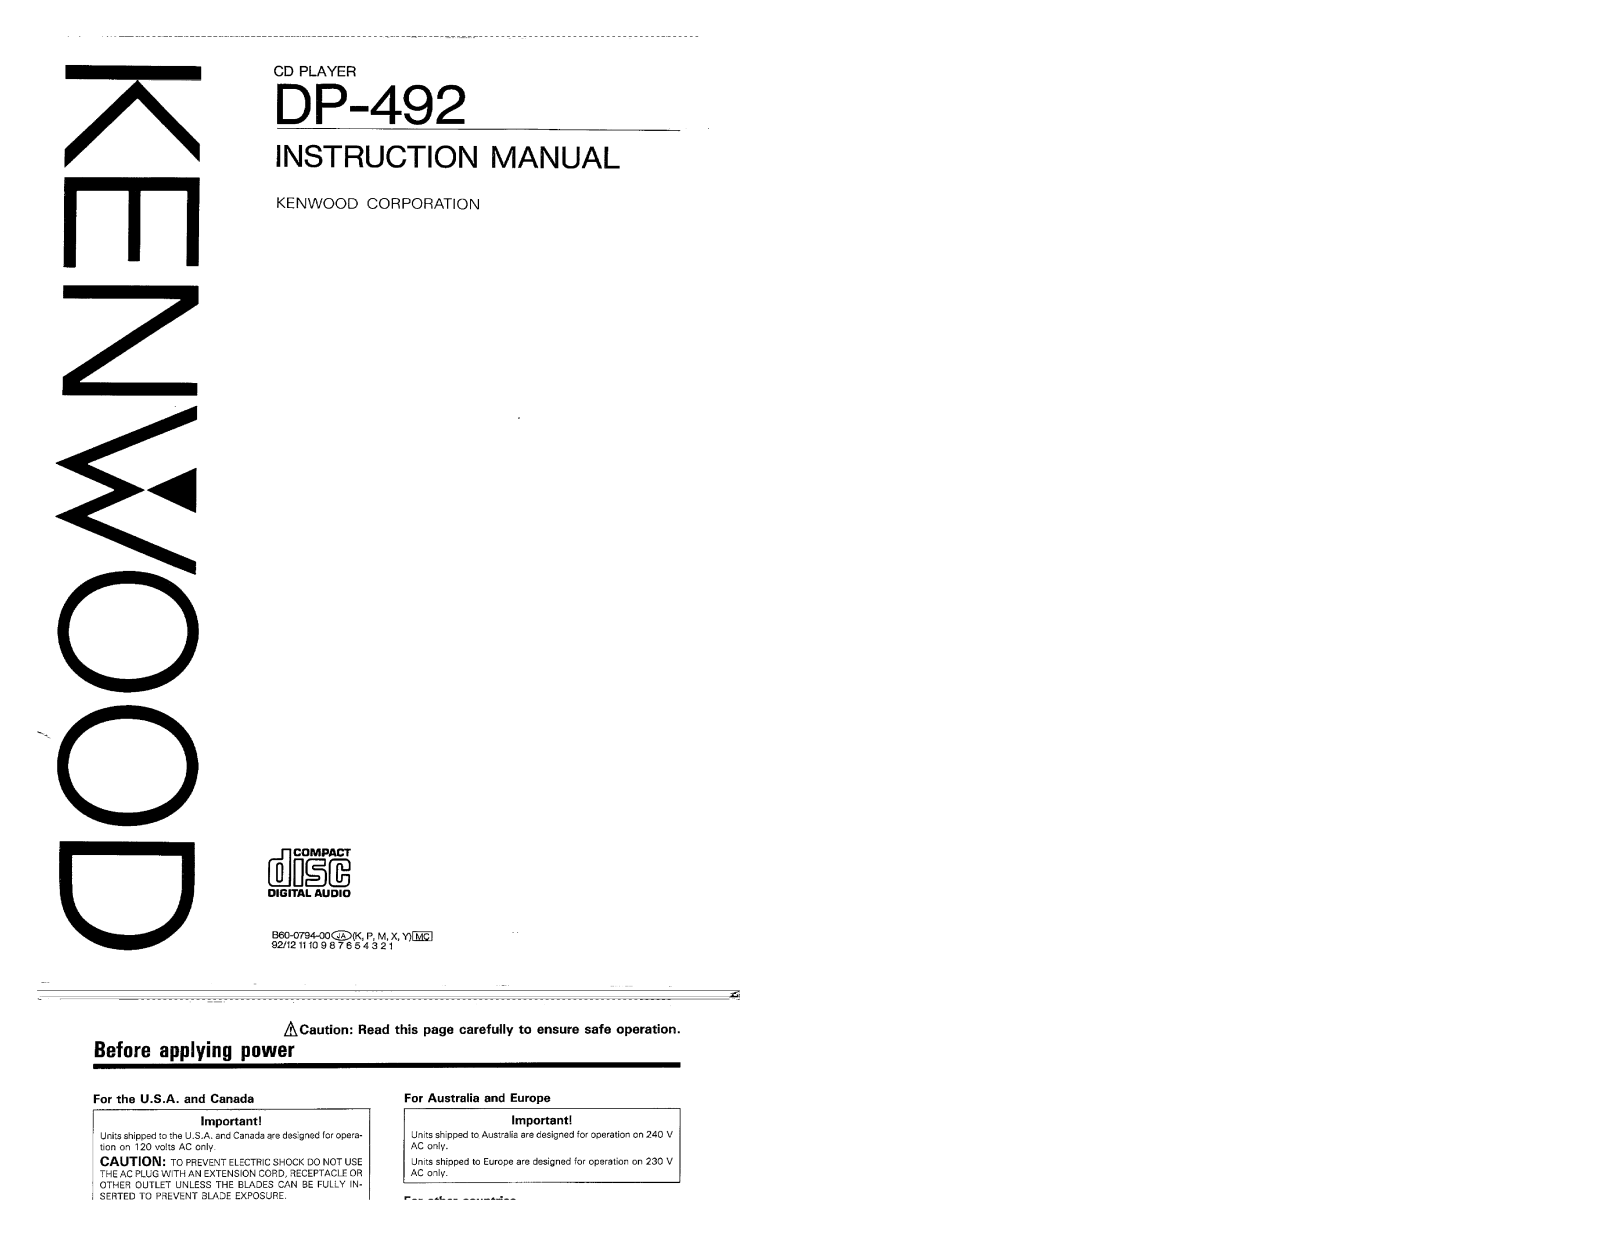 Kenwood DP-492 Owner's Manual